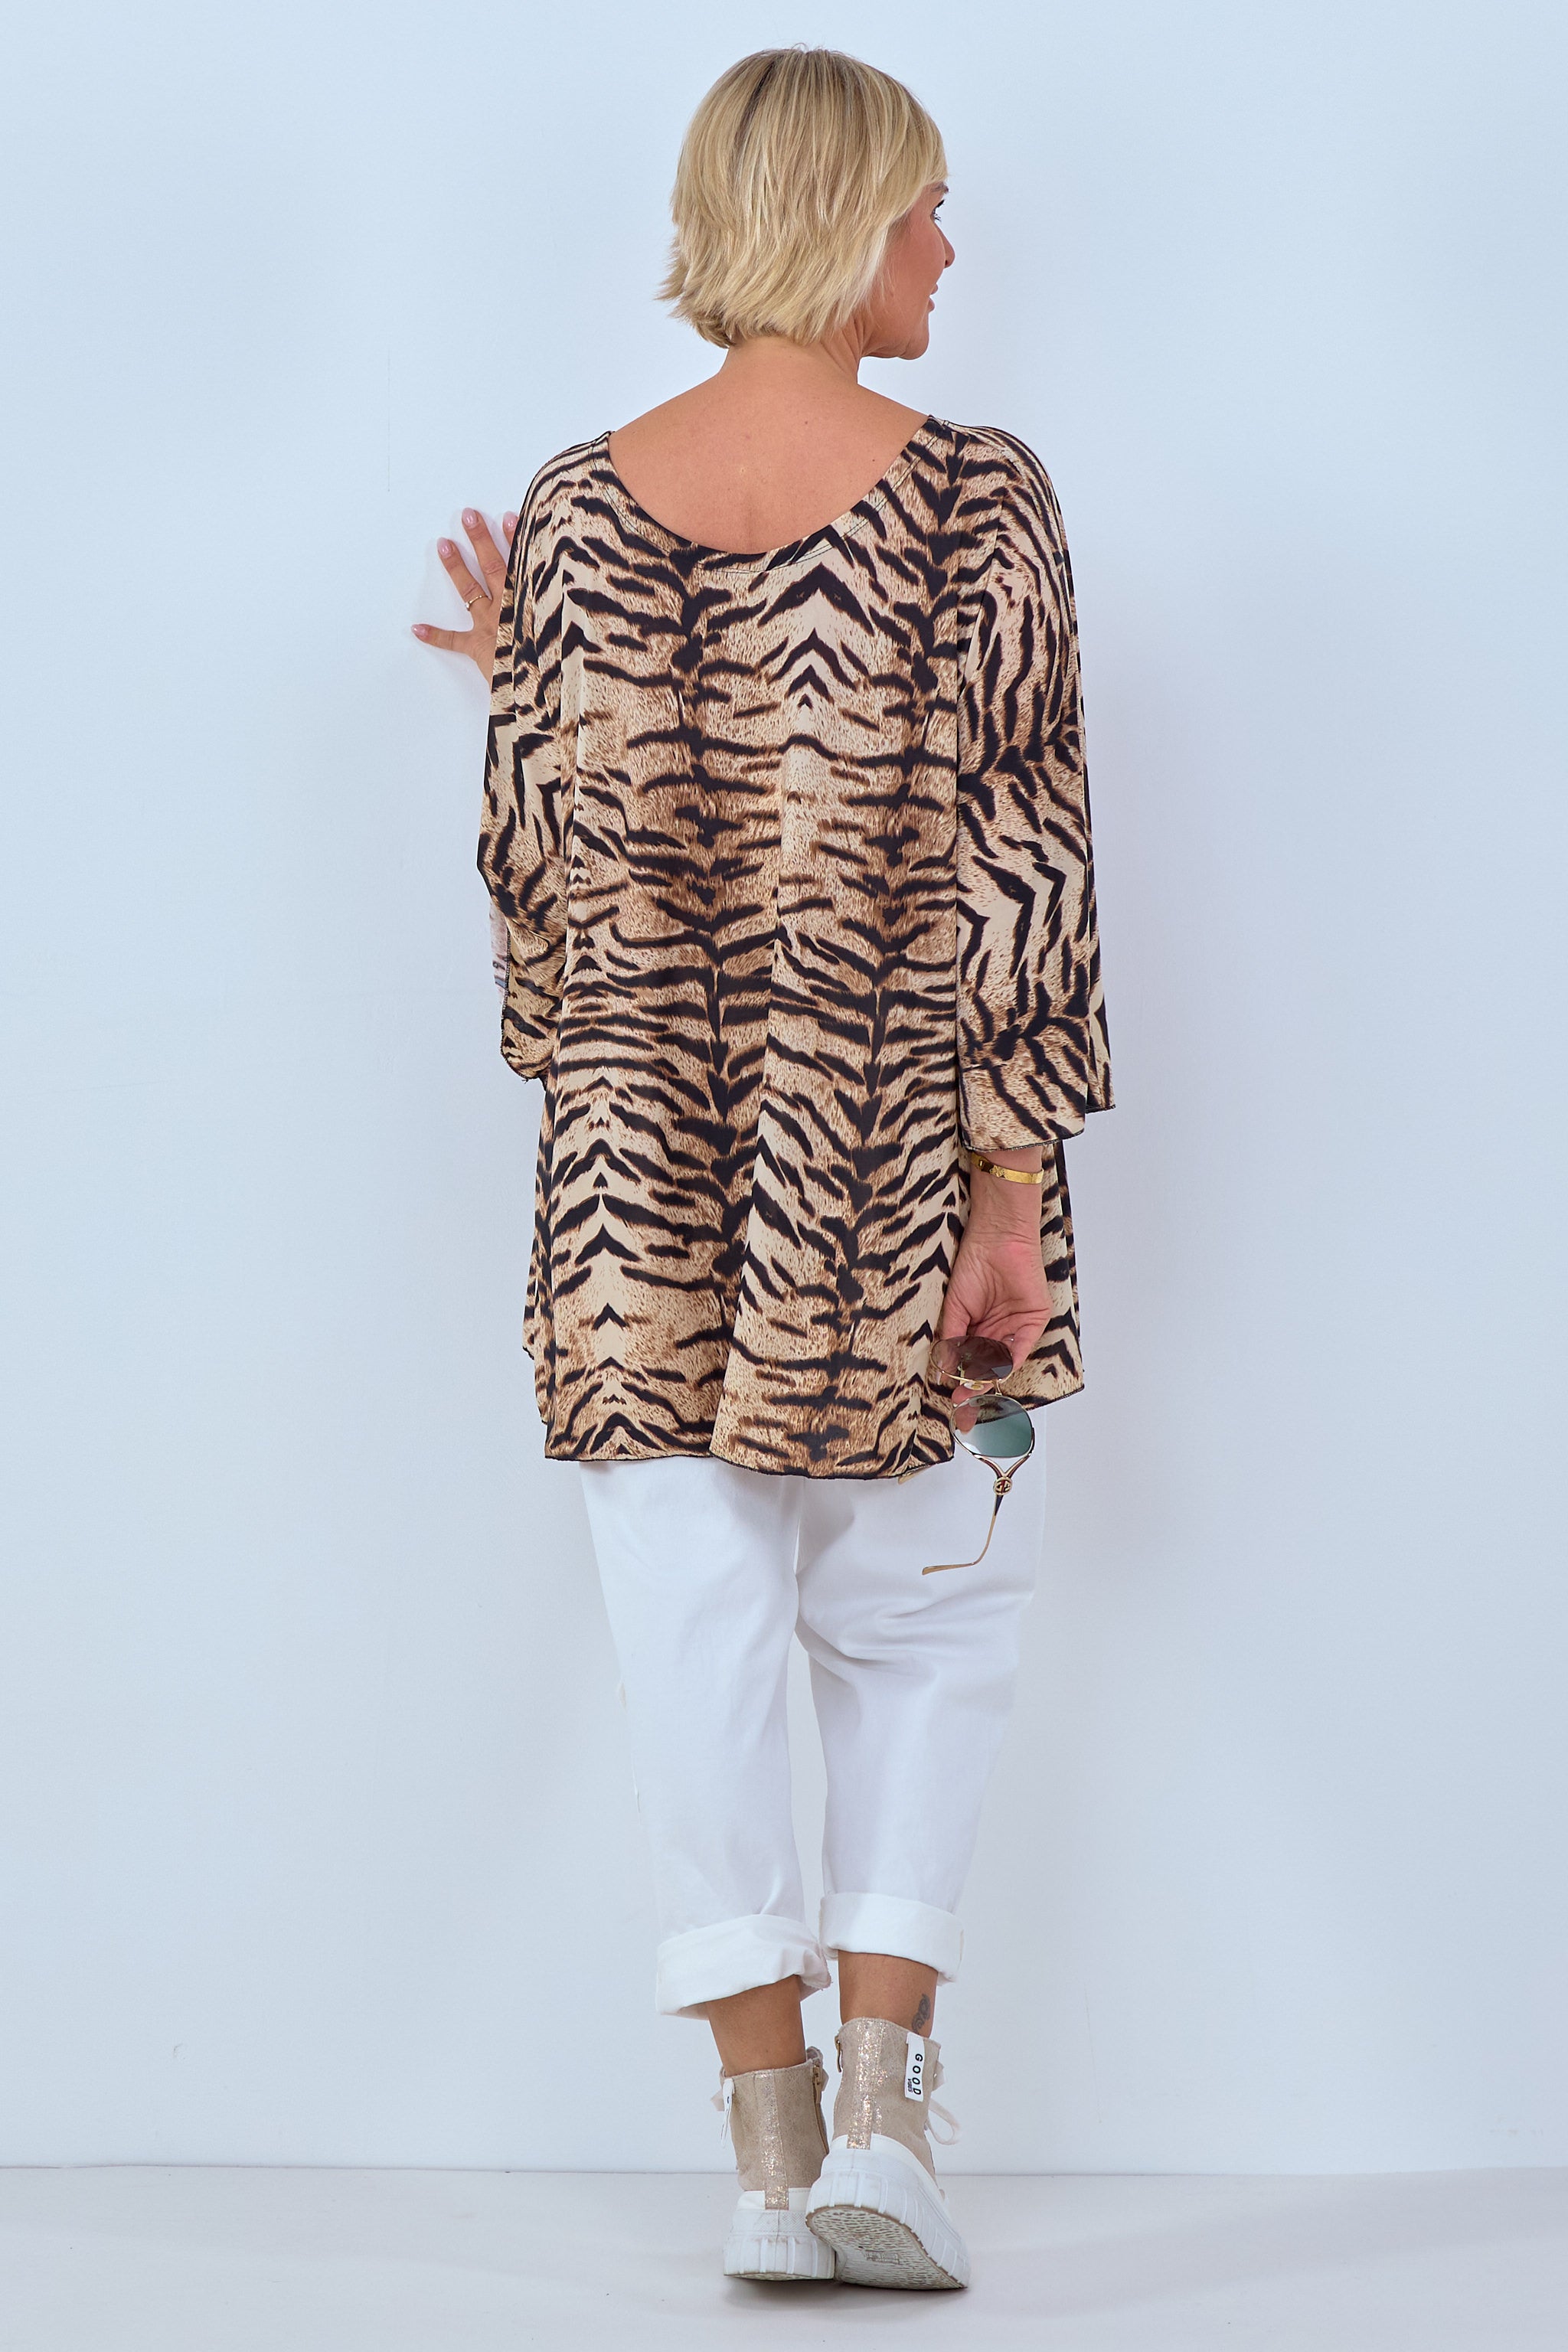 Shirt with tiger pattern, beige-brown-black